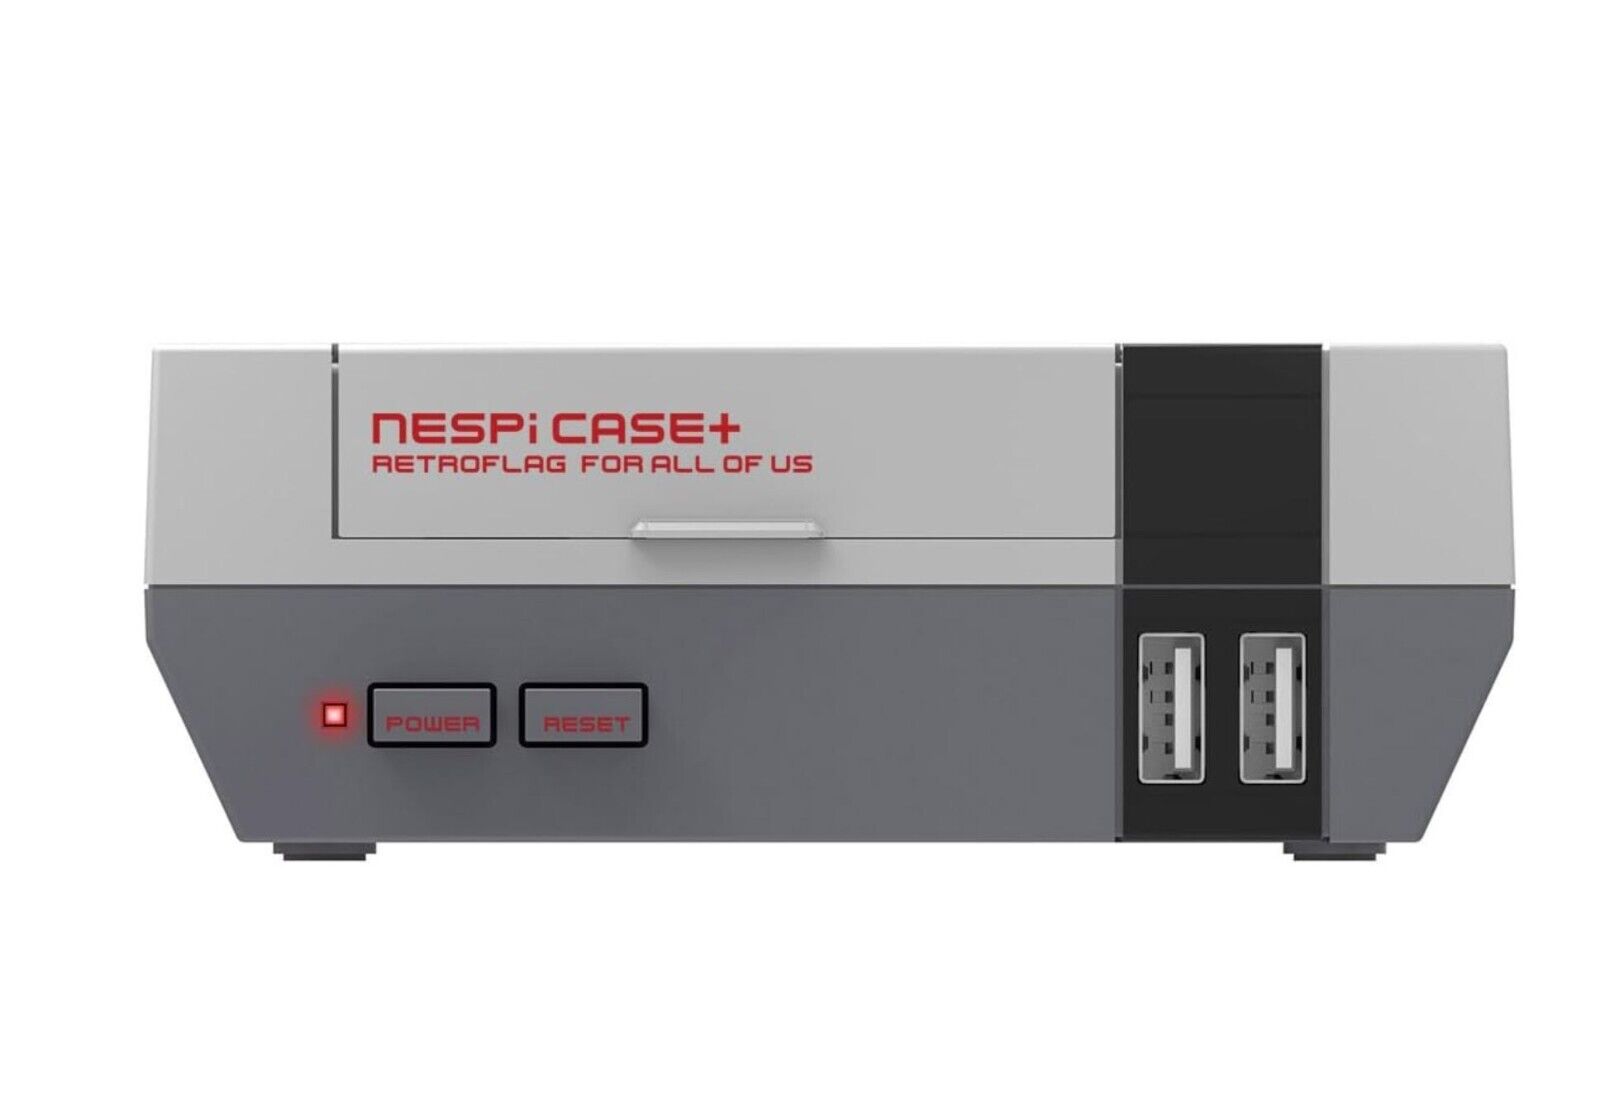 Retroflag NESPi Case Plus with Safe Shutdown for RetroPie Raspberry Pi 3/2 Model